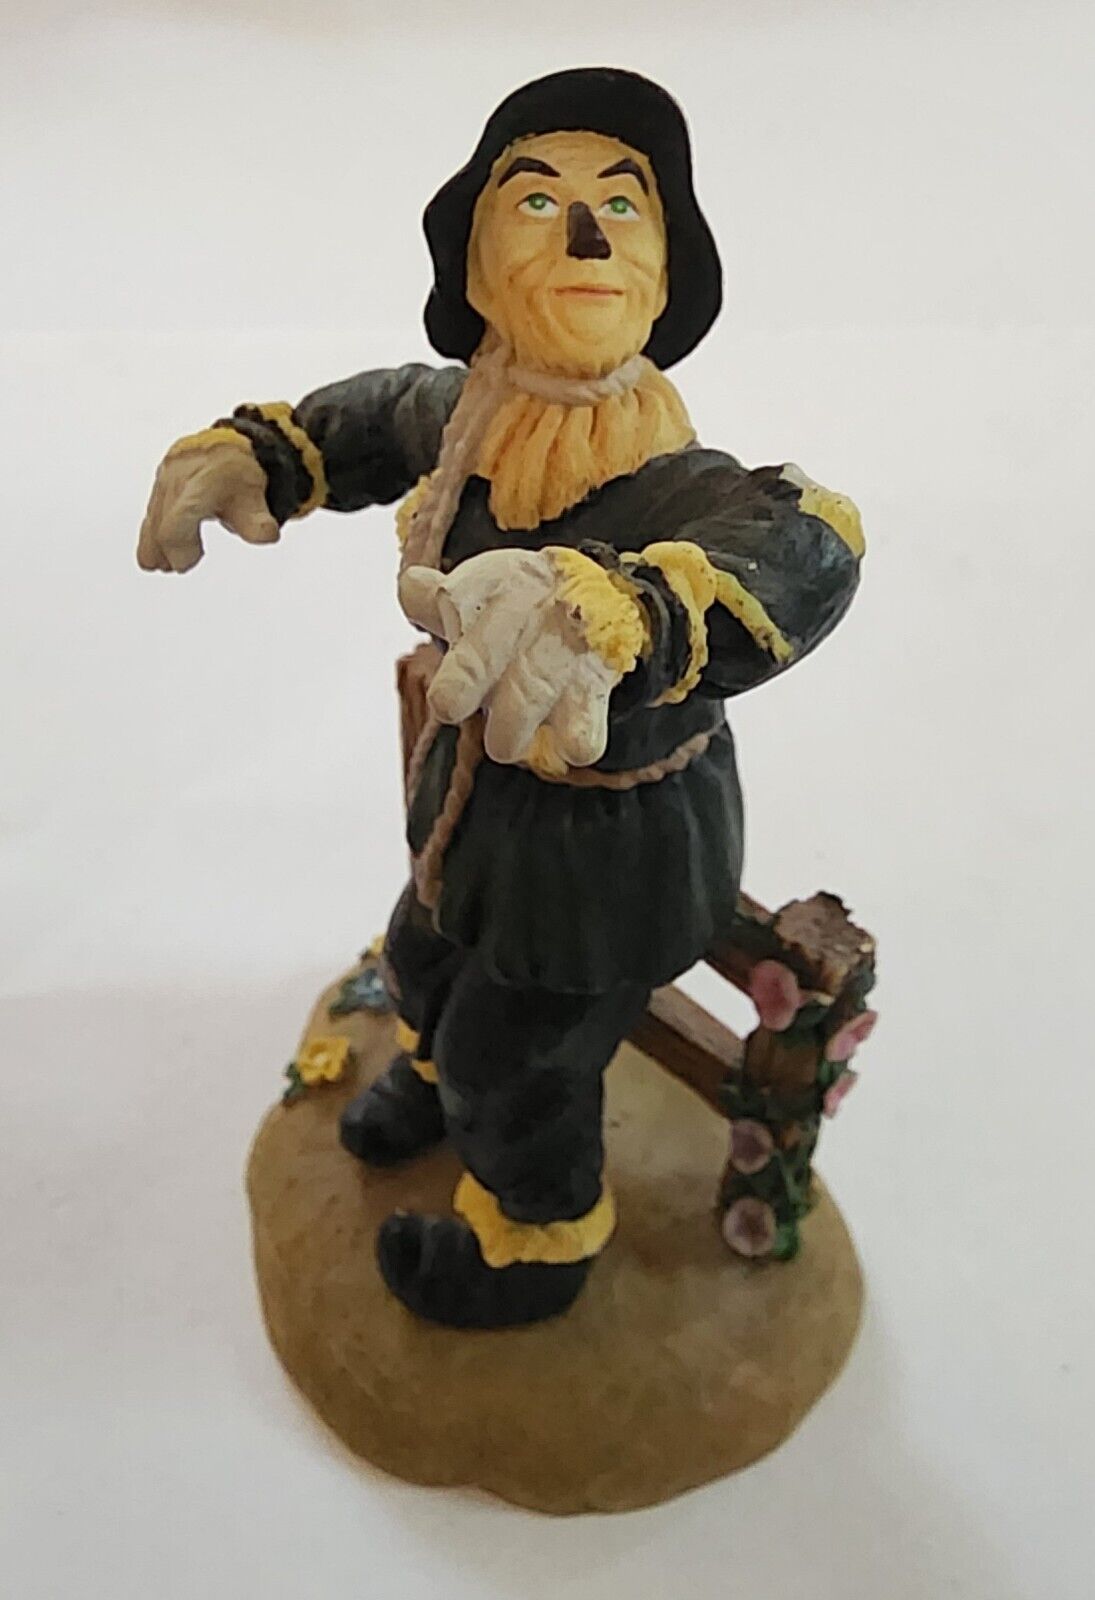 Vintage The Wizard Of Oz Scarecrow Figurine 1999 Enesco Turner Entertainment 